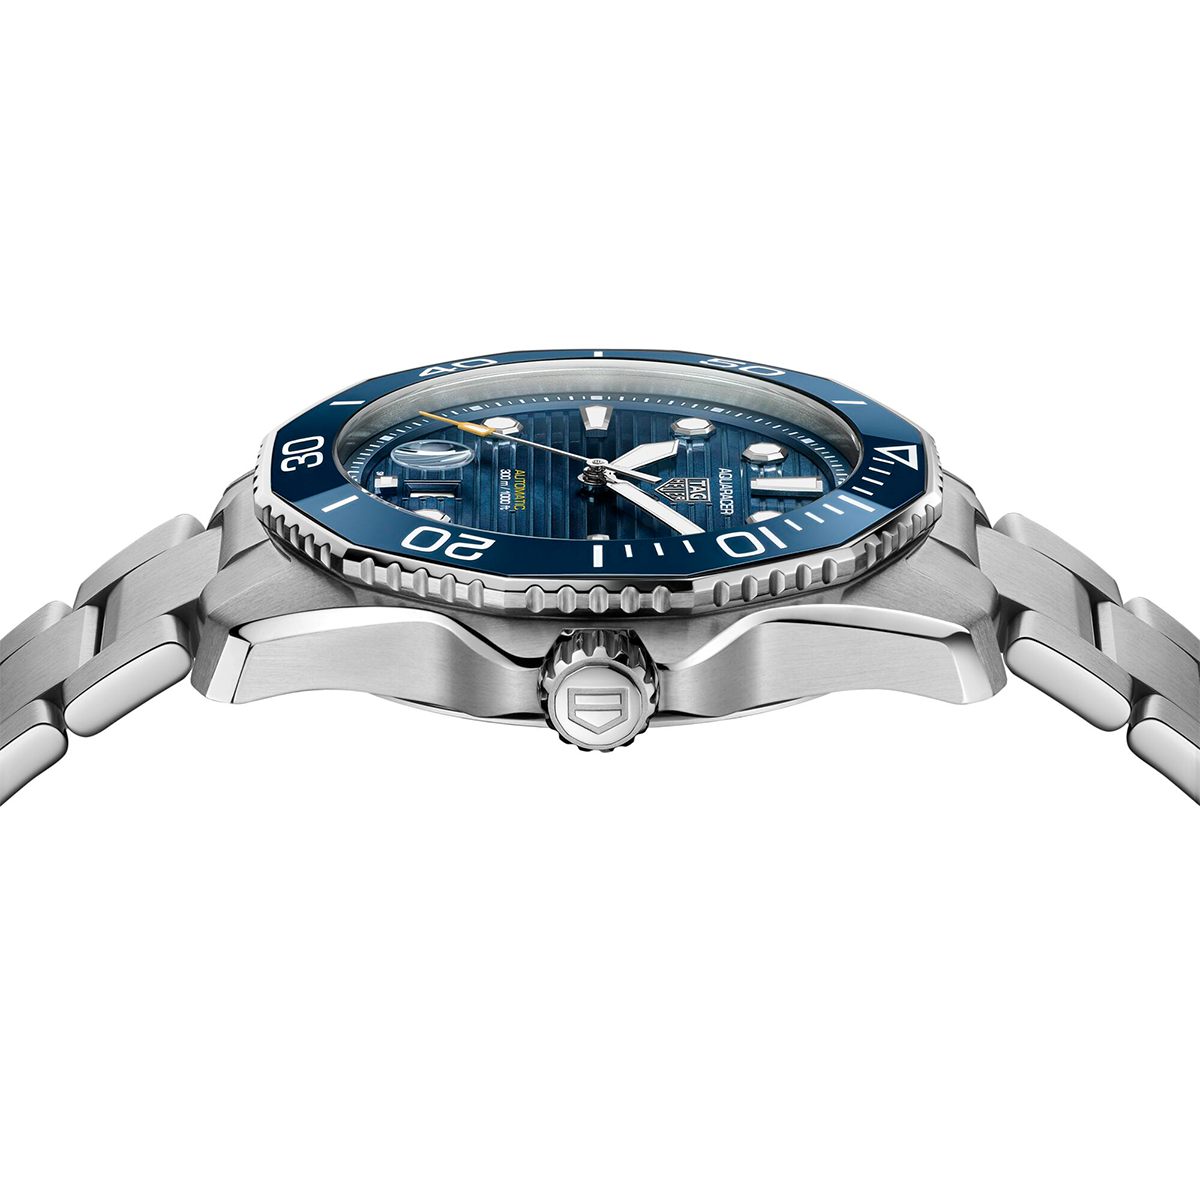 Aquaracer Professional 300 43mm Steel Automatic Watch